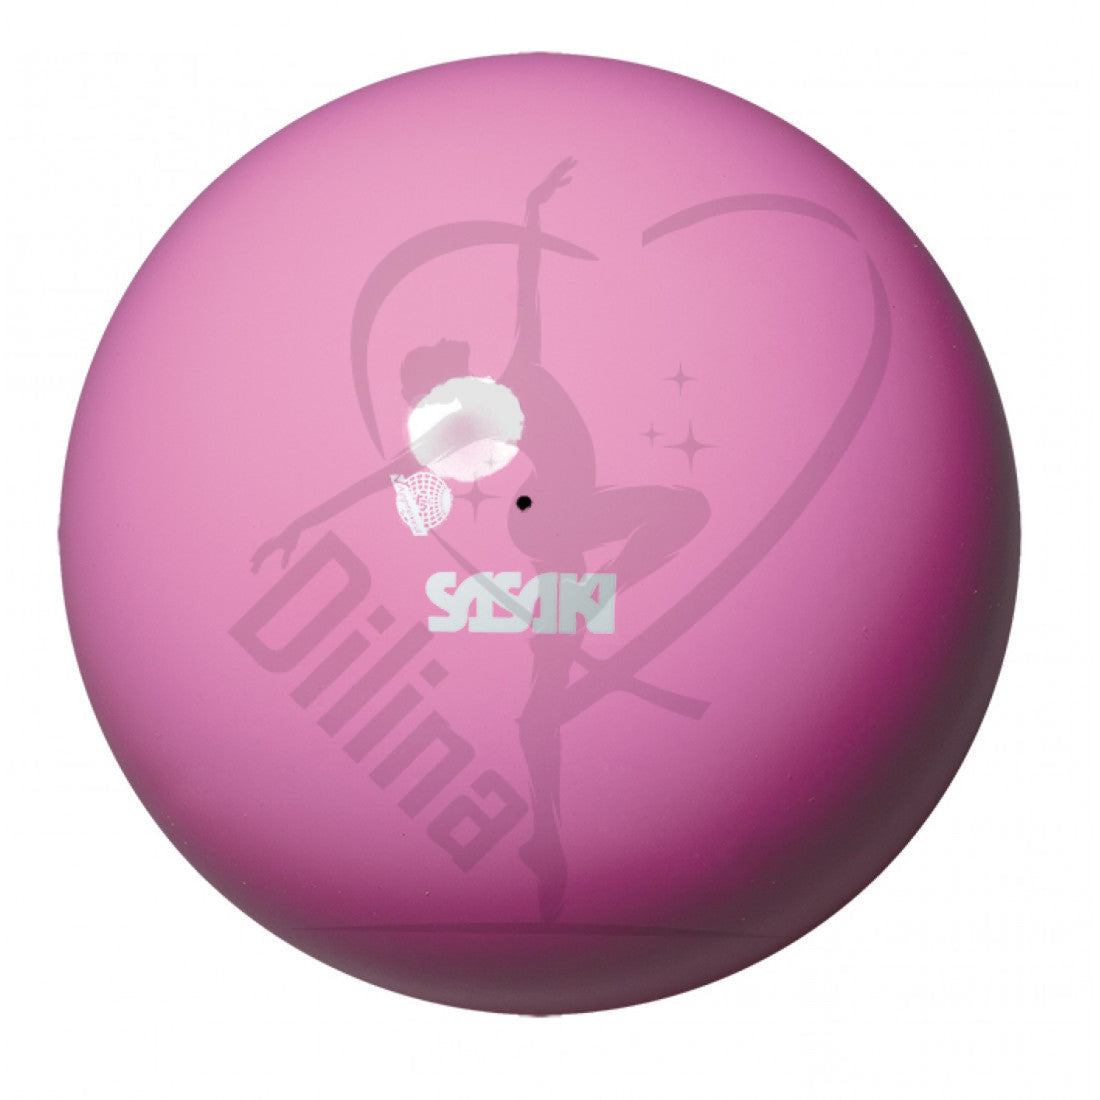 Sasaki Gymstar Ball 18Cm Pink Balls